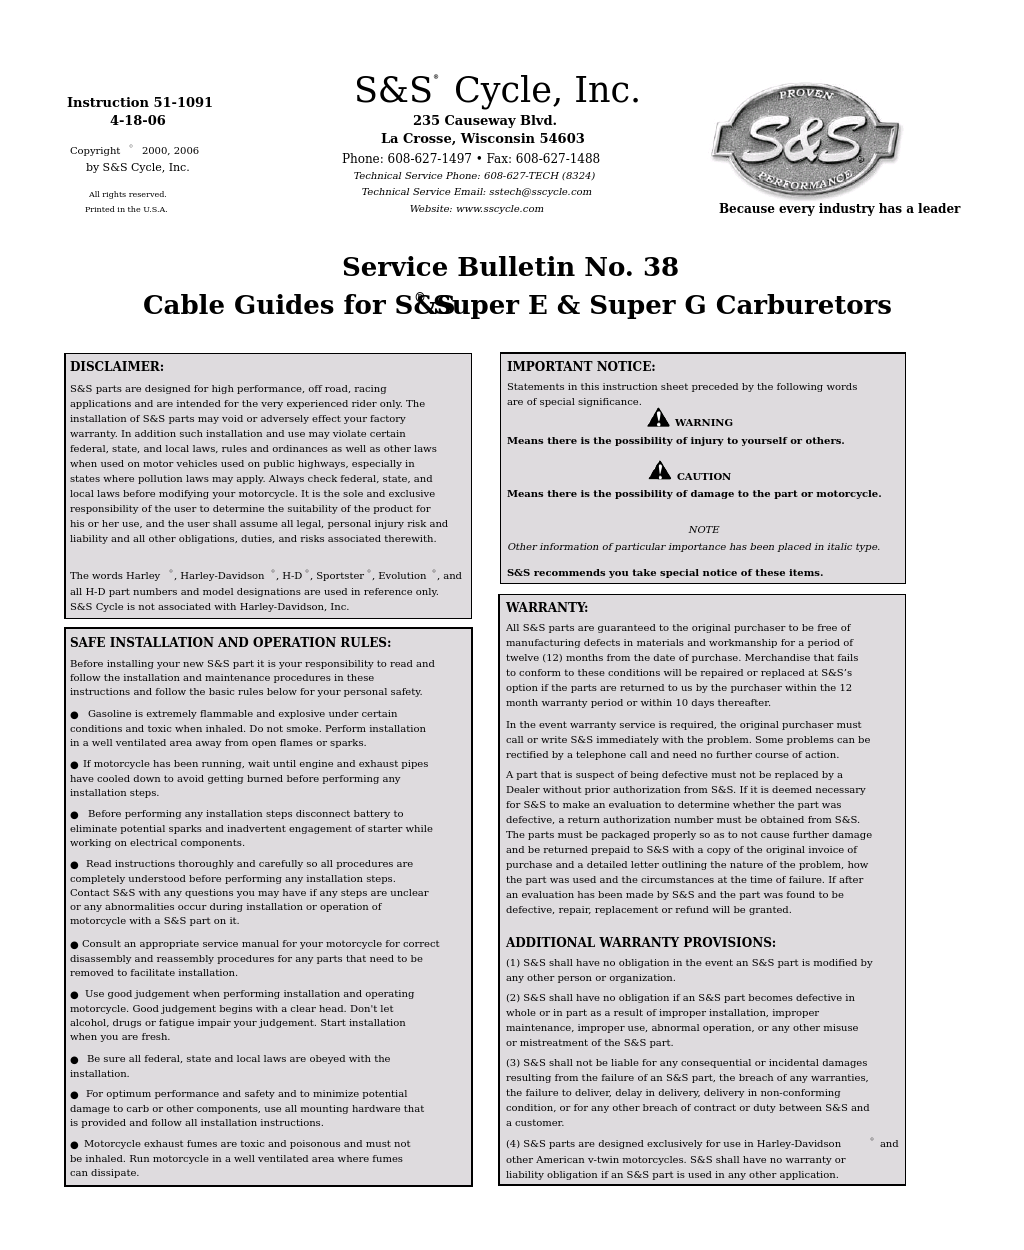 Cable Guides for S&S Super E & Super G Carburetors